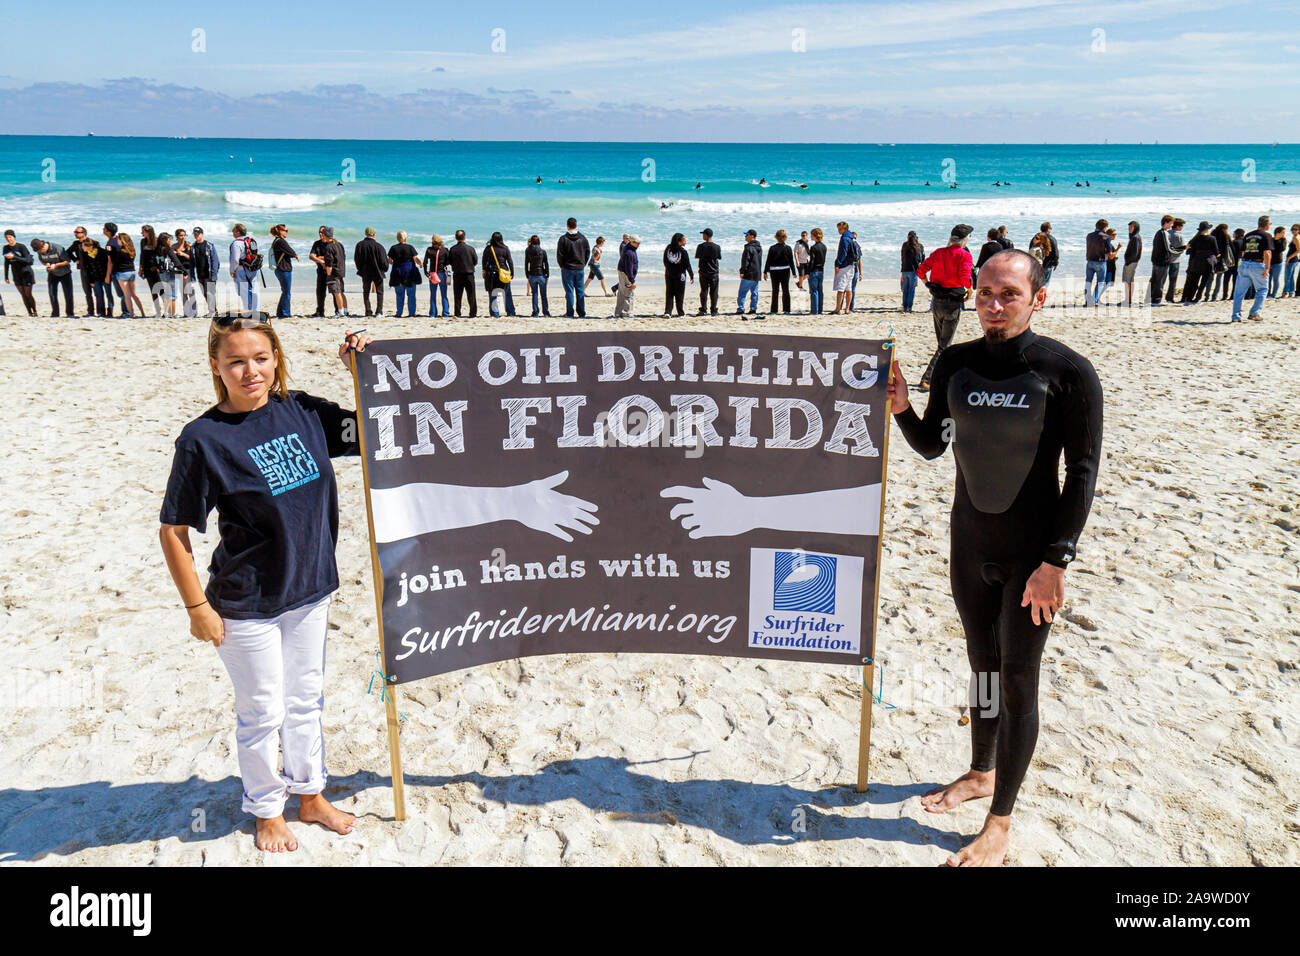 Miami Beach Florida,Surfrider Foundation,No Offshore Florida Oil Drilling protest,Black clothing representa aceite,sign,Atlantic Ocean,water,surf,FL10021 Foto de stock